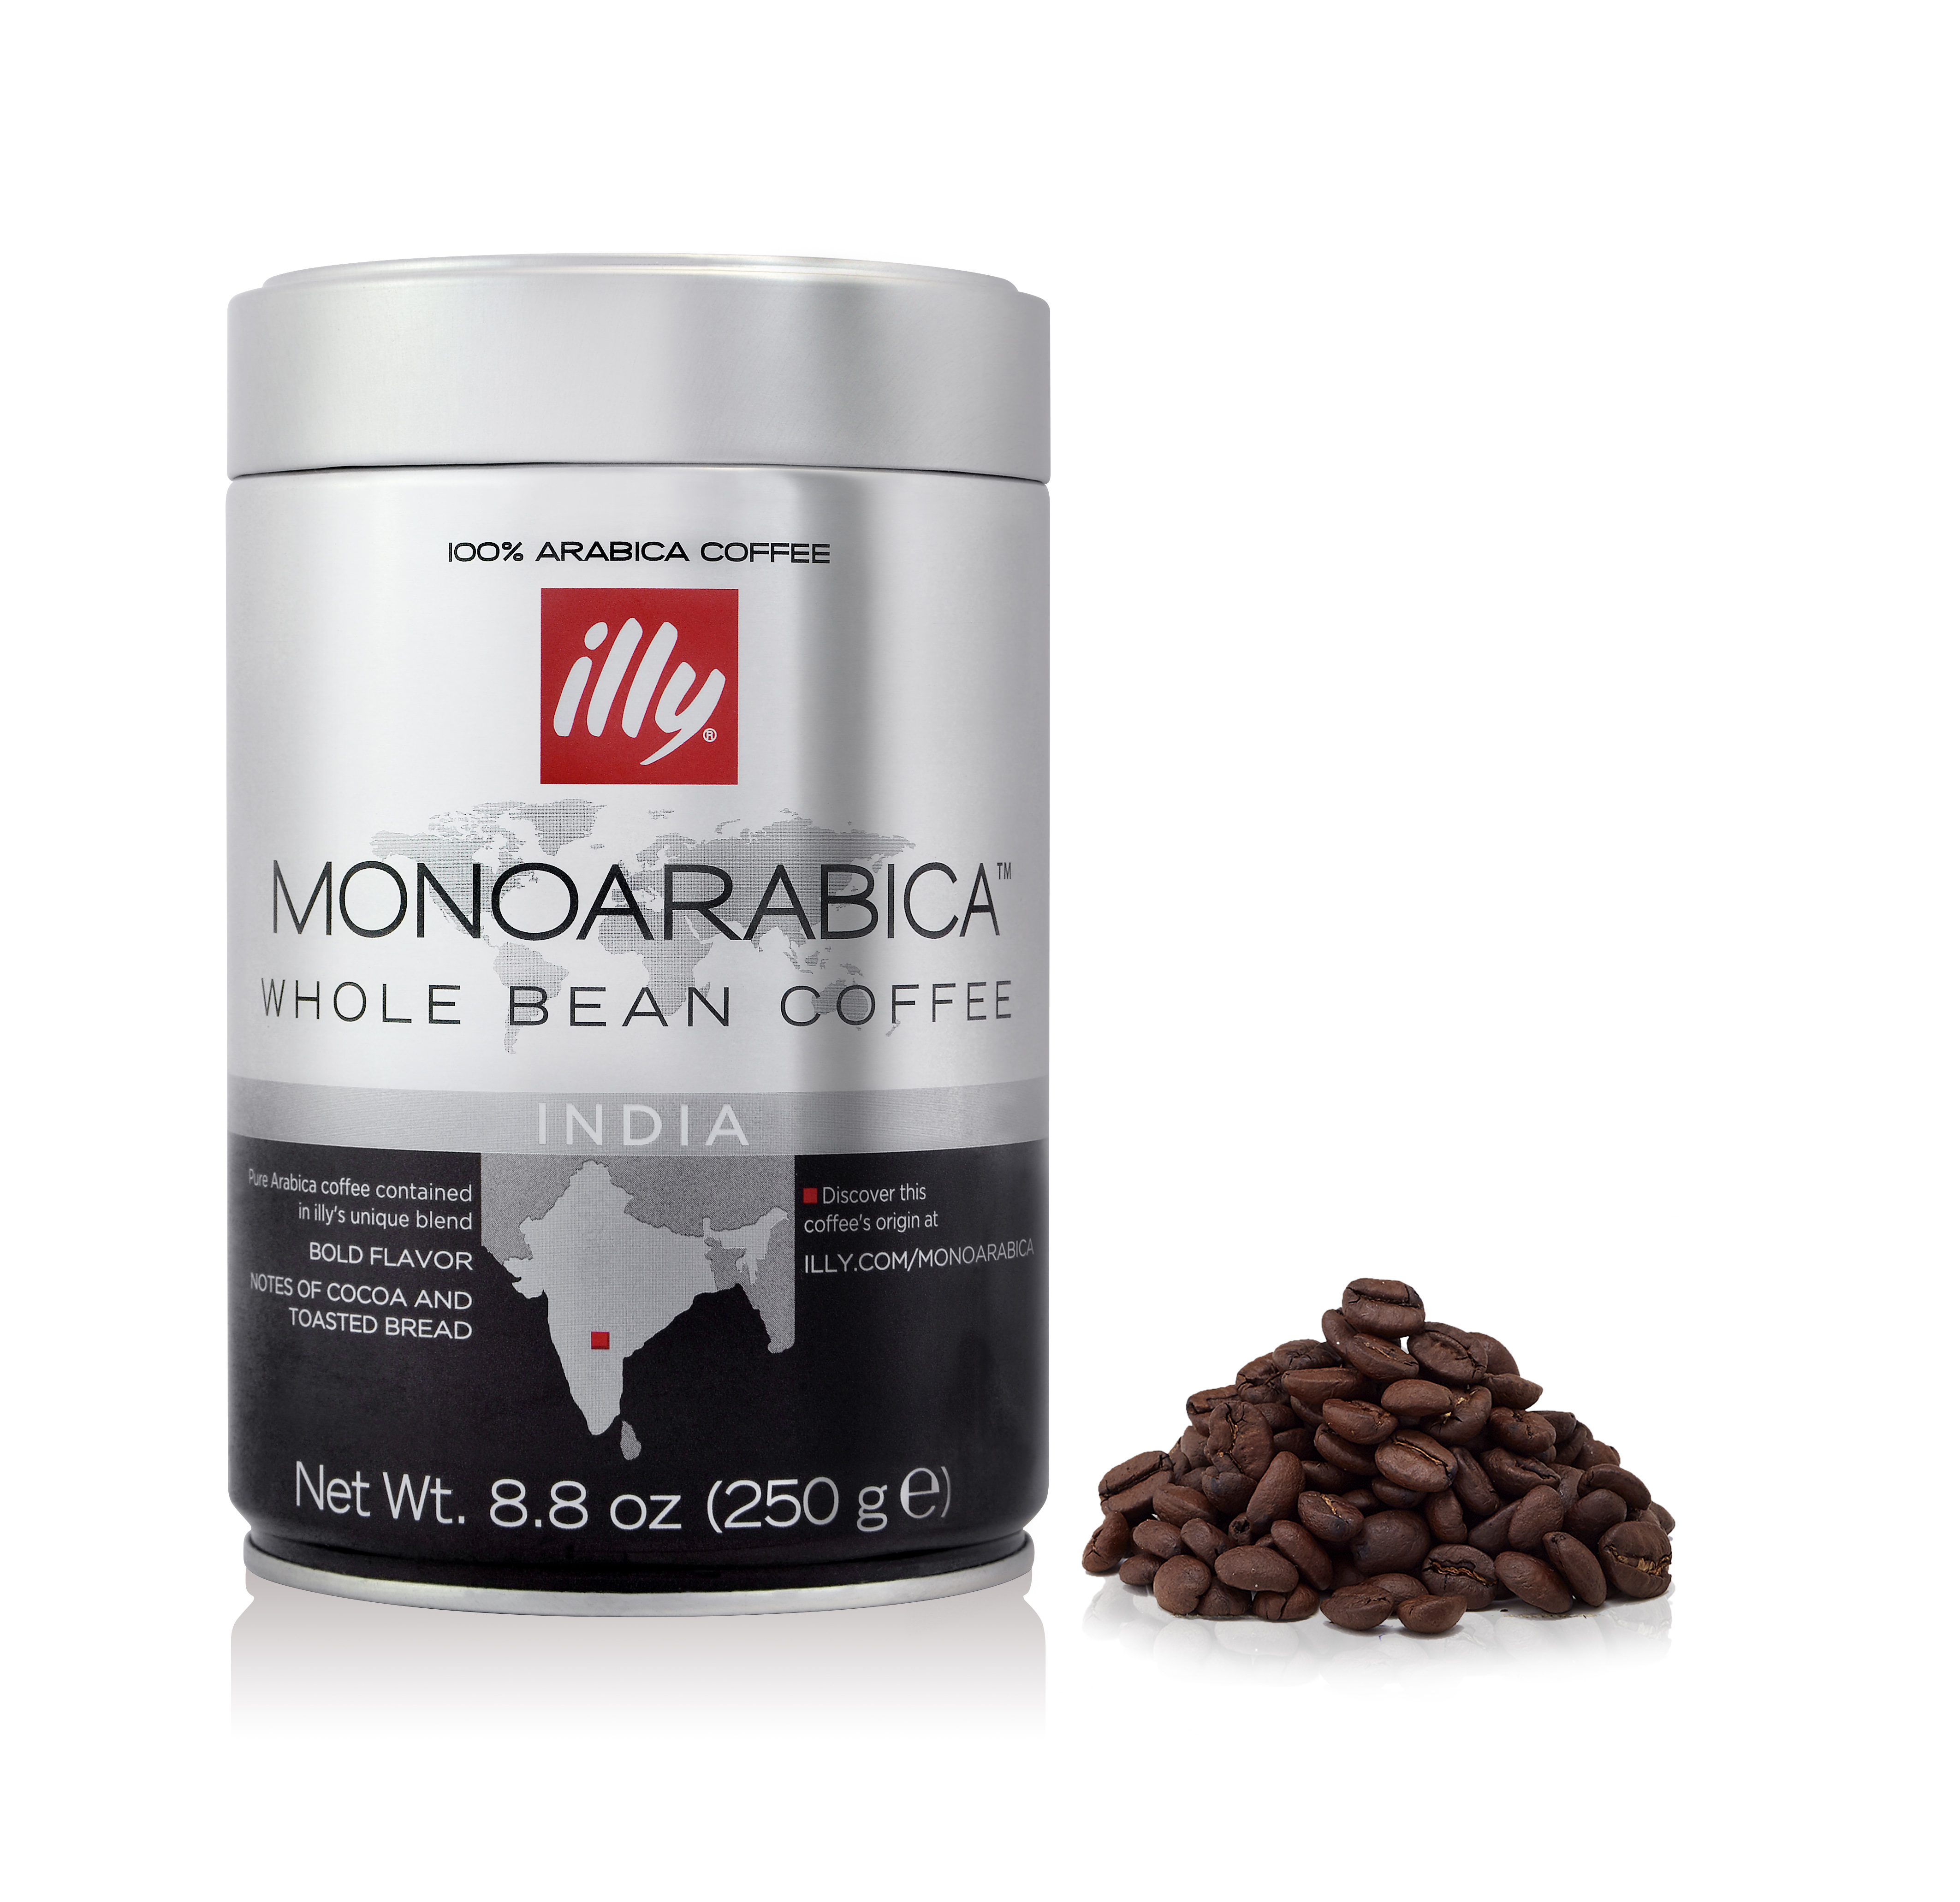 illy MONOARABICA� Whole Bean Coffee India